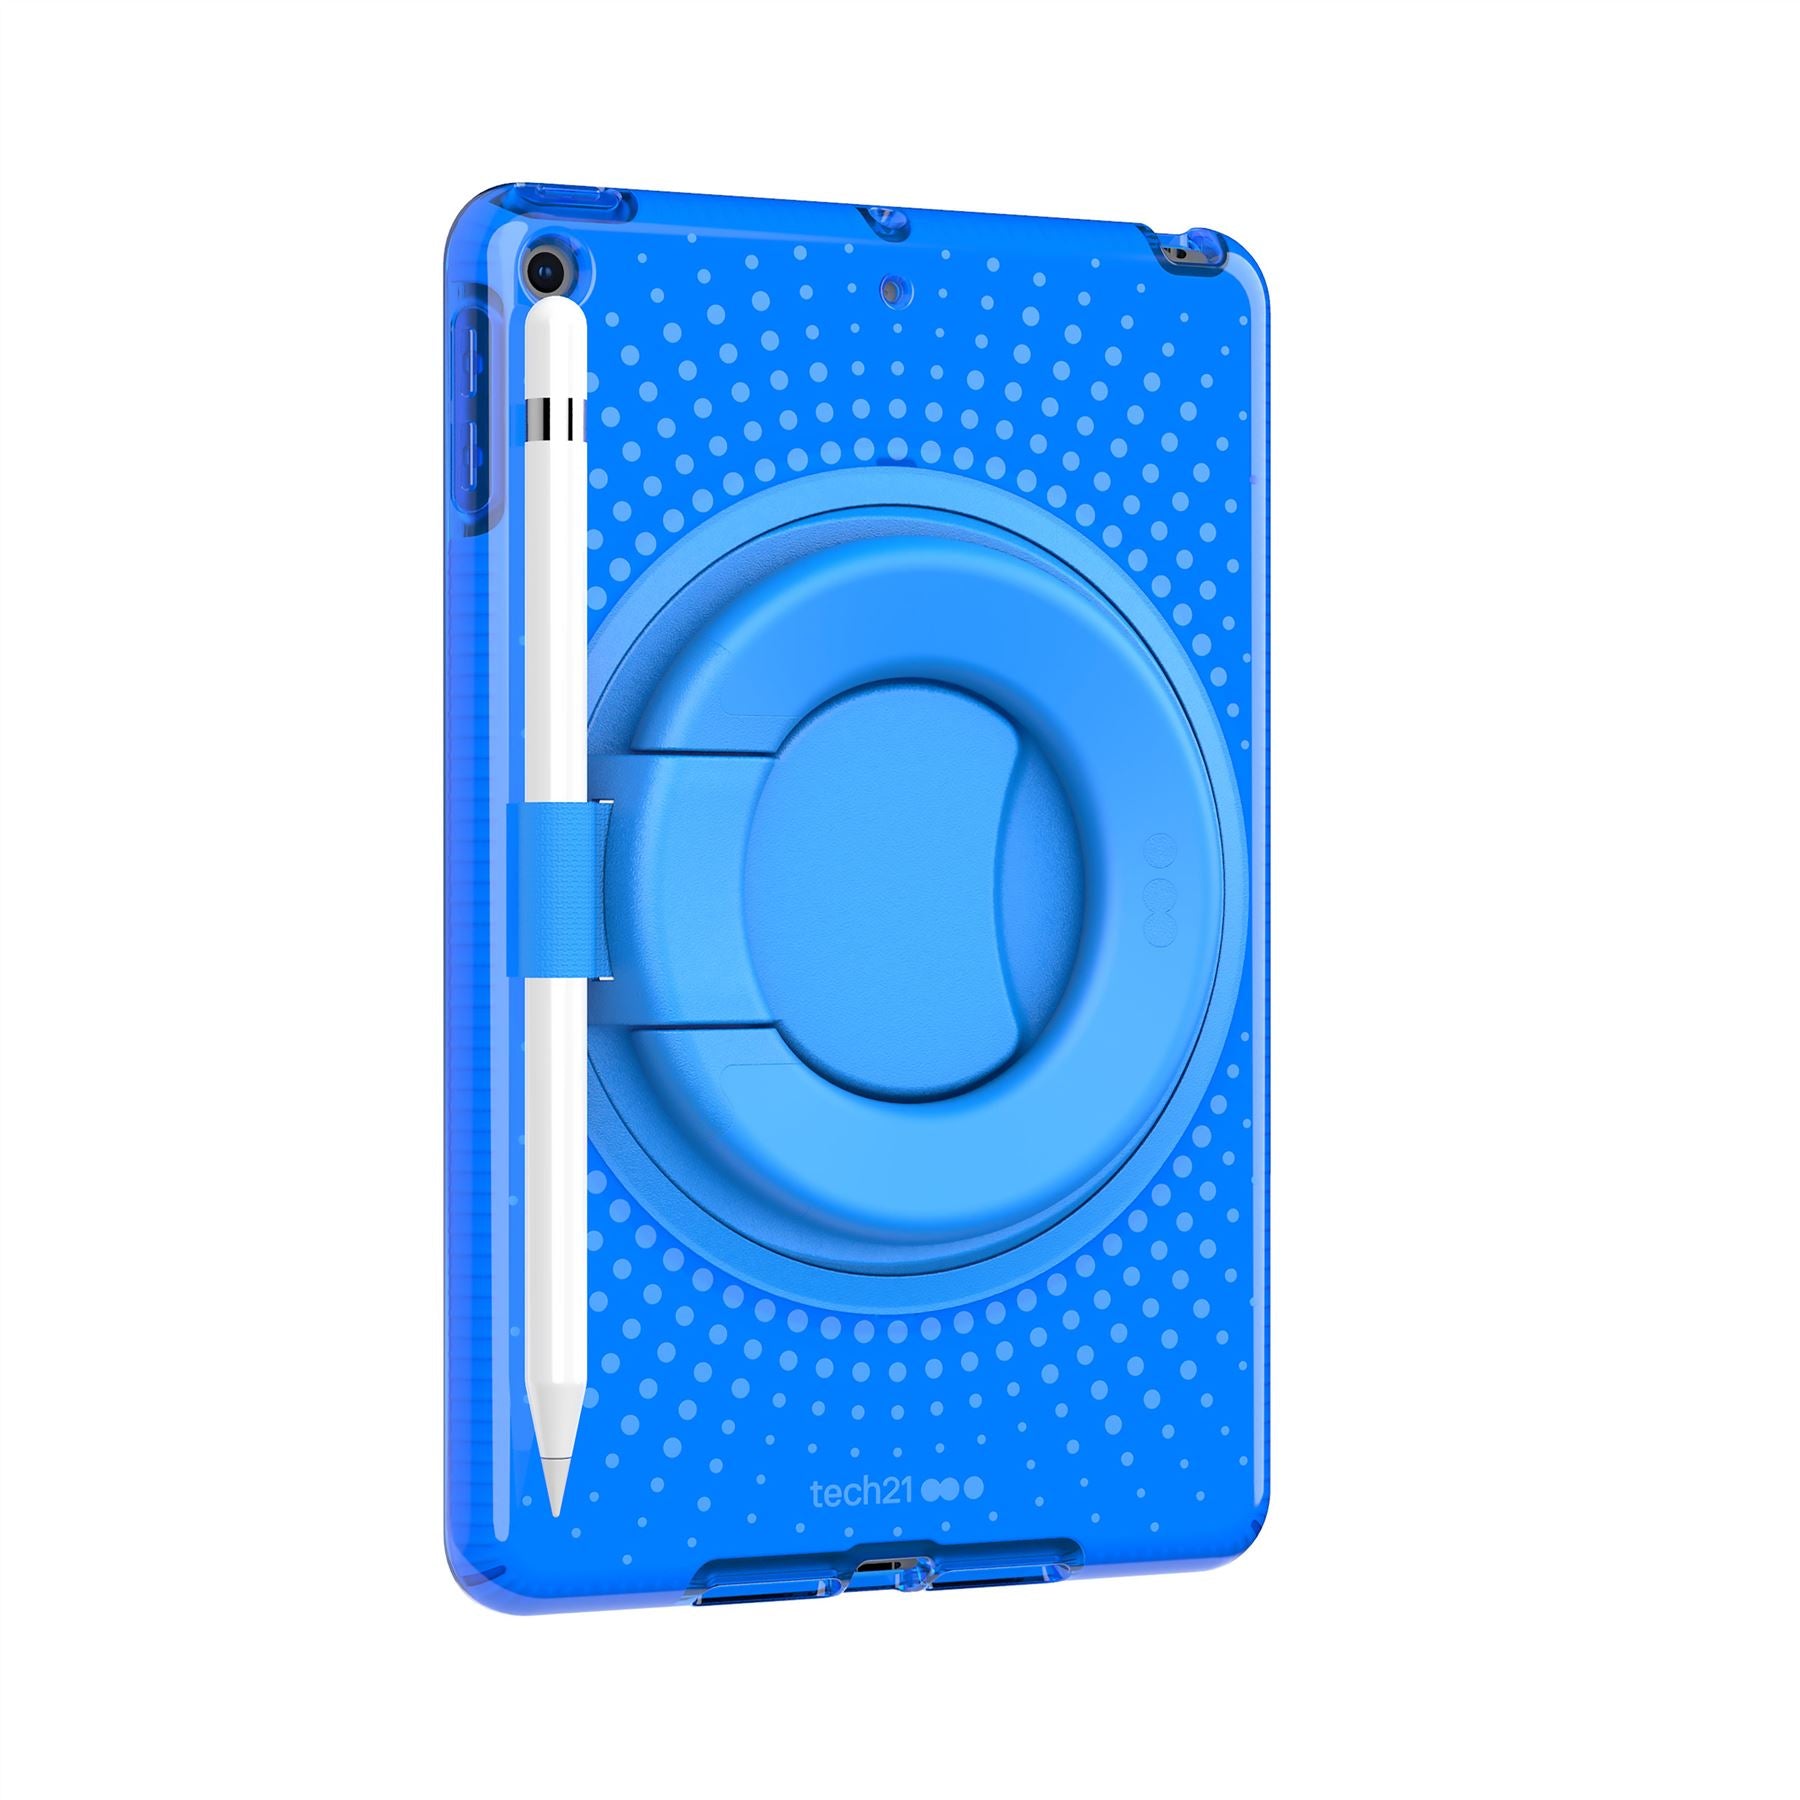 Evo Play2 - Apple iPad Mini 5 With Ret Case (2019) - Blue